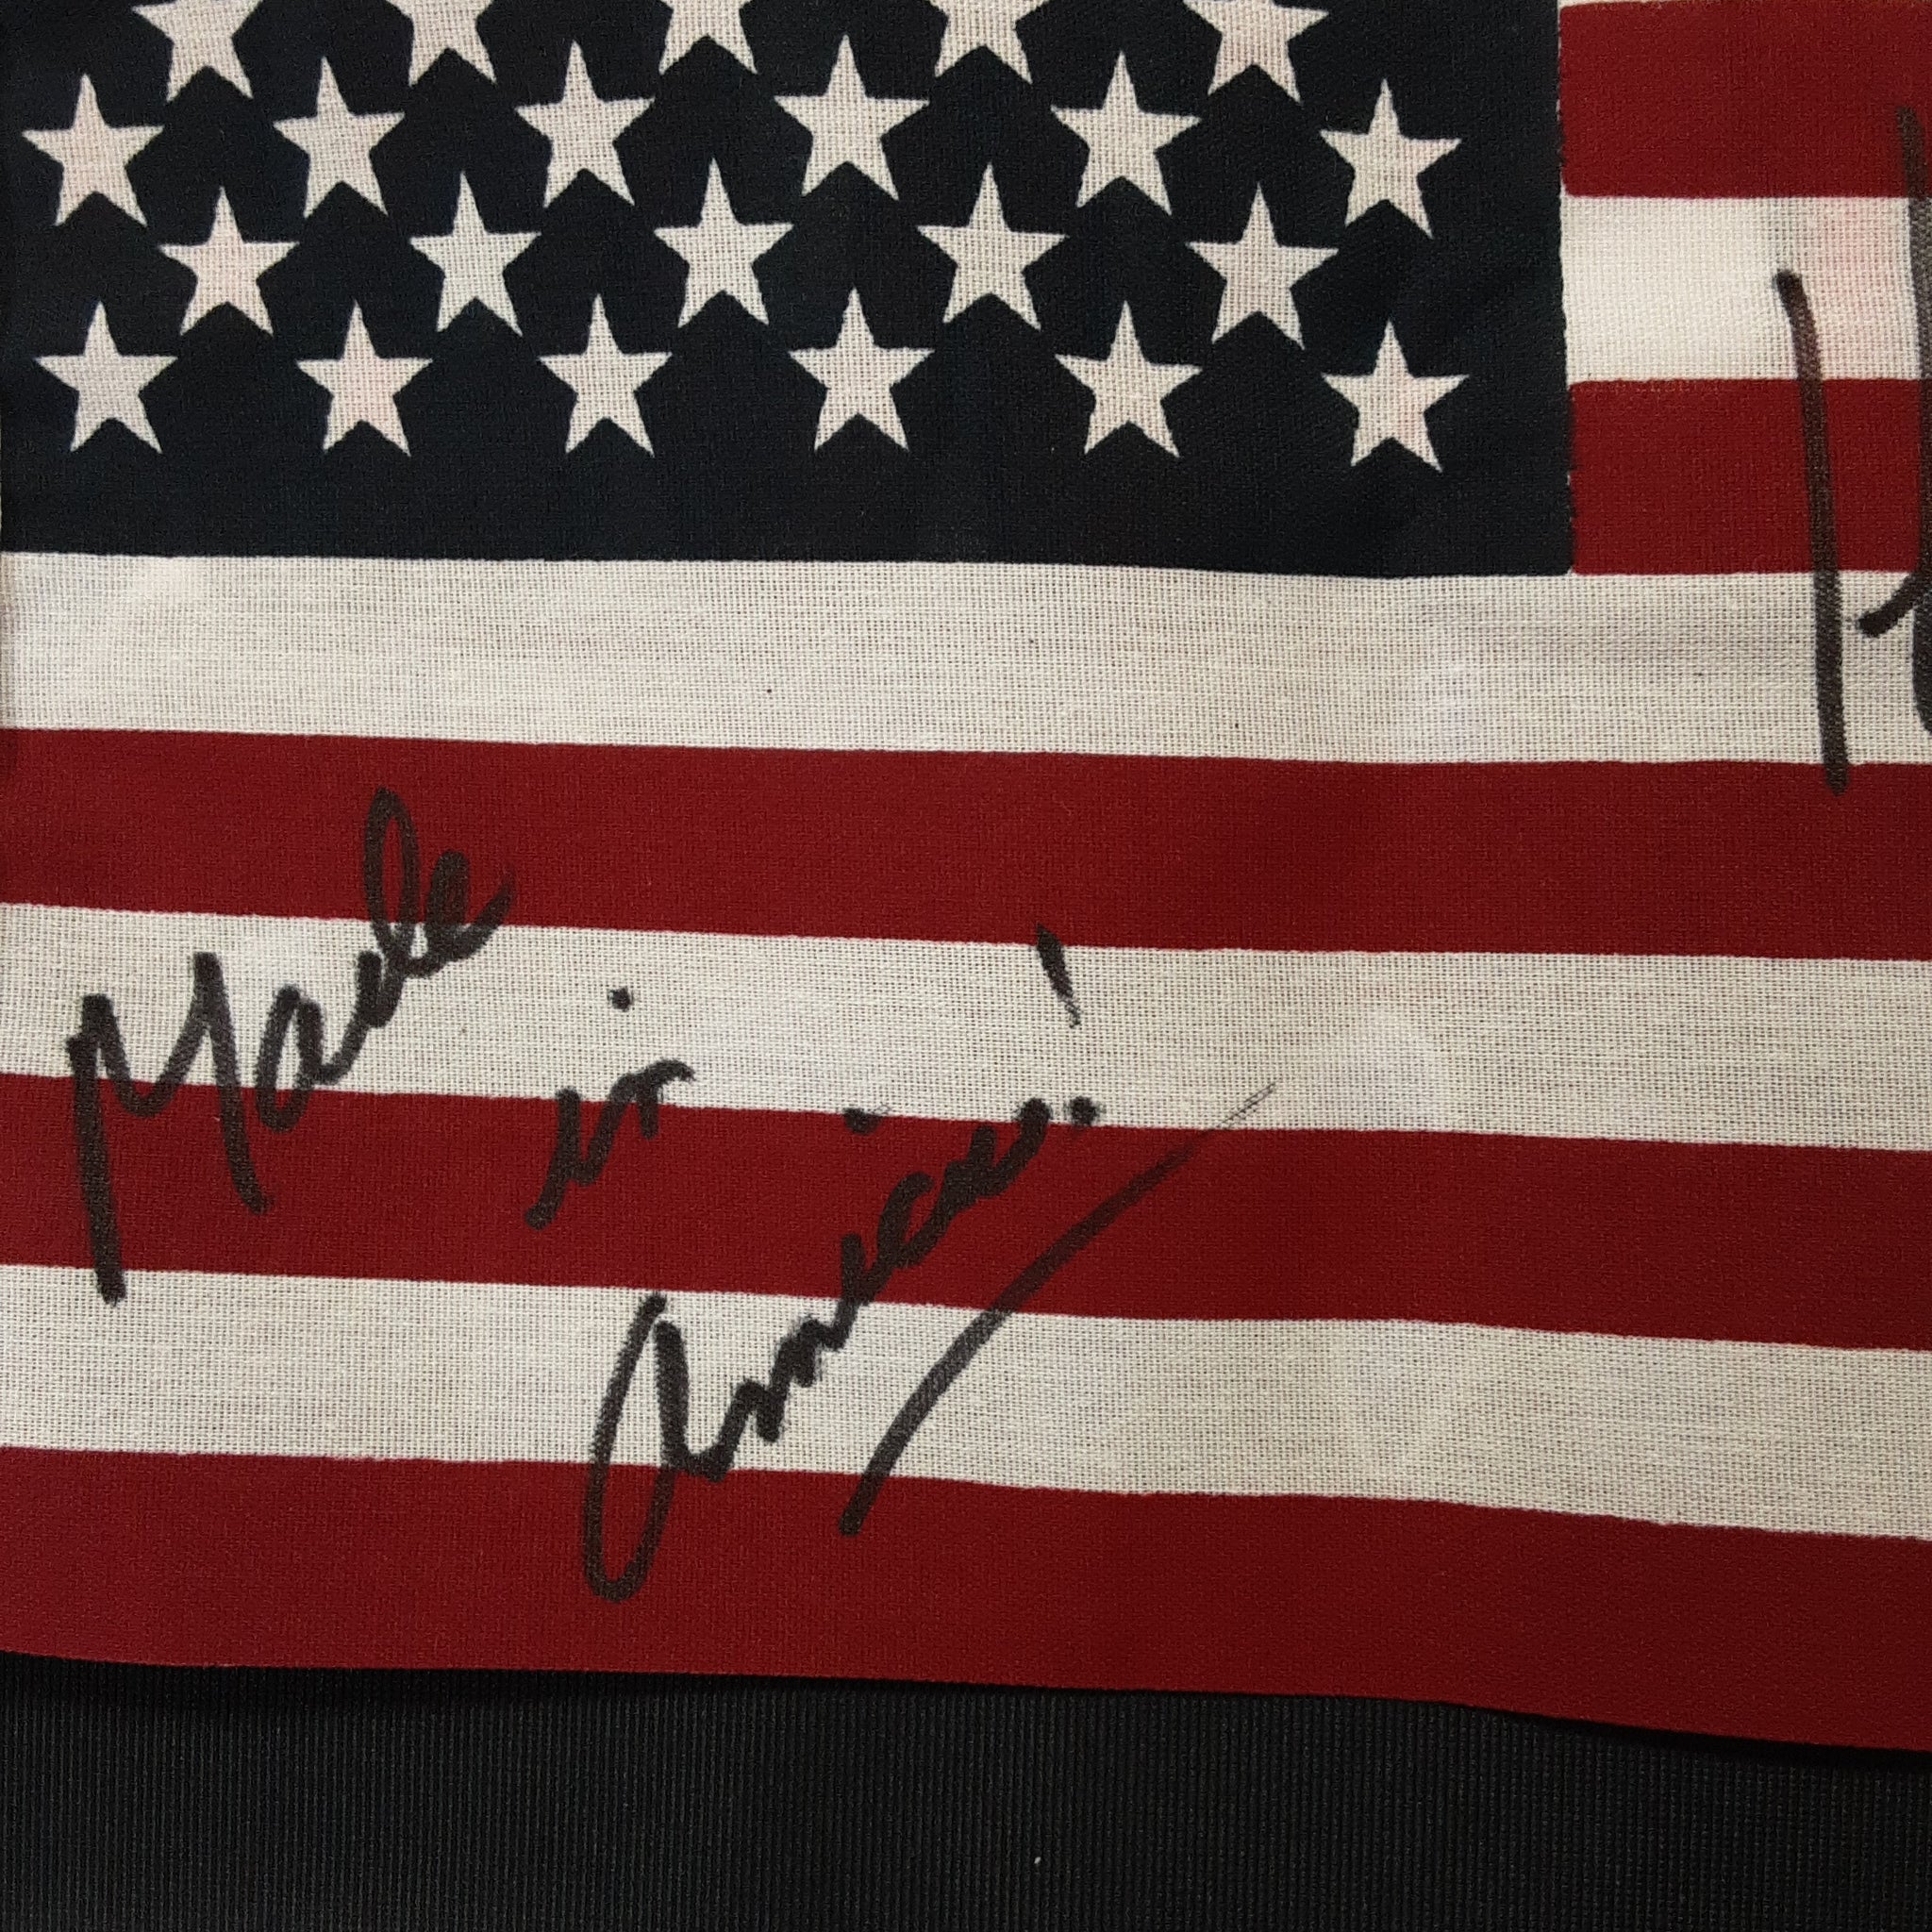 "Hacksaw" Jim Duggan Authentic Signed Autographed Mini American Flag with Inscription JSA